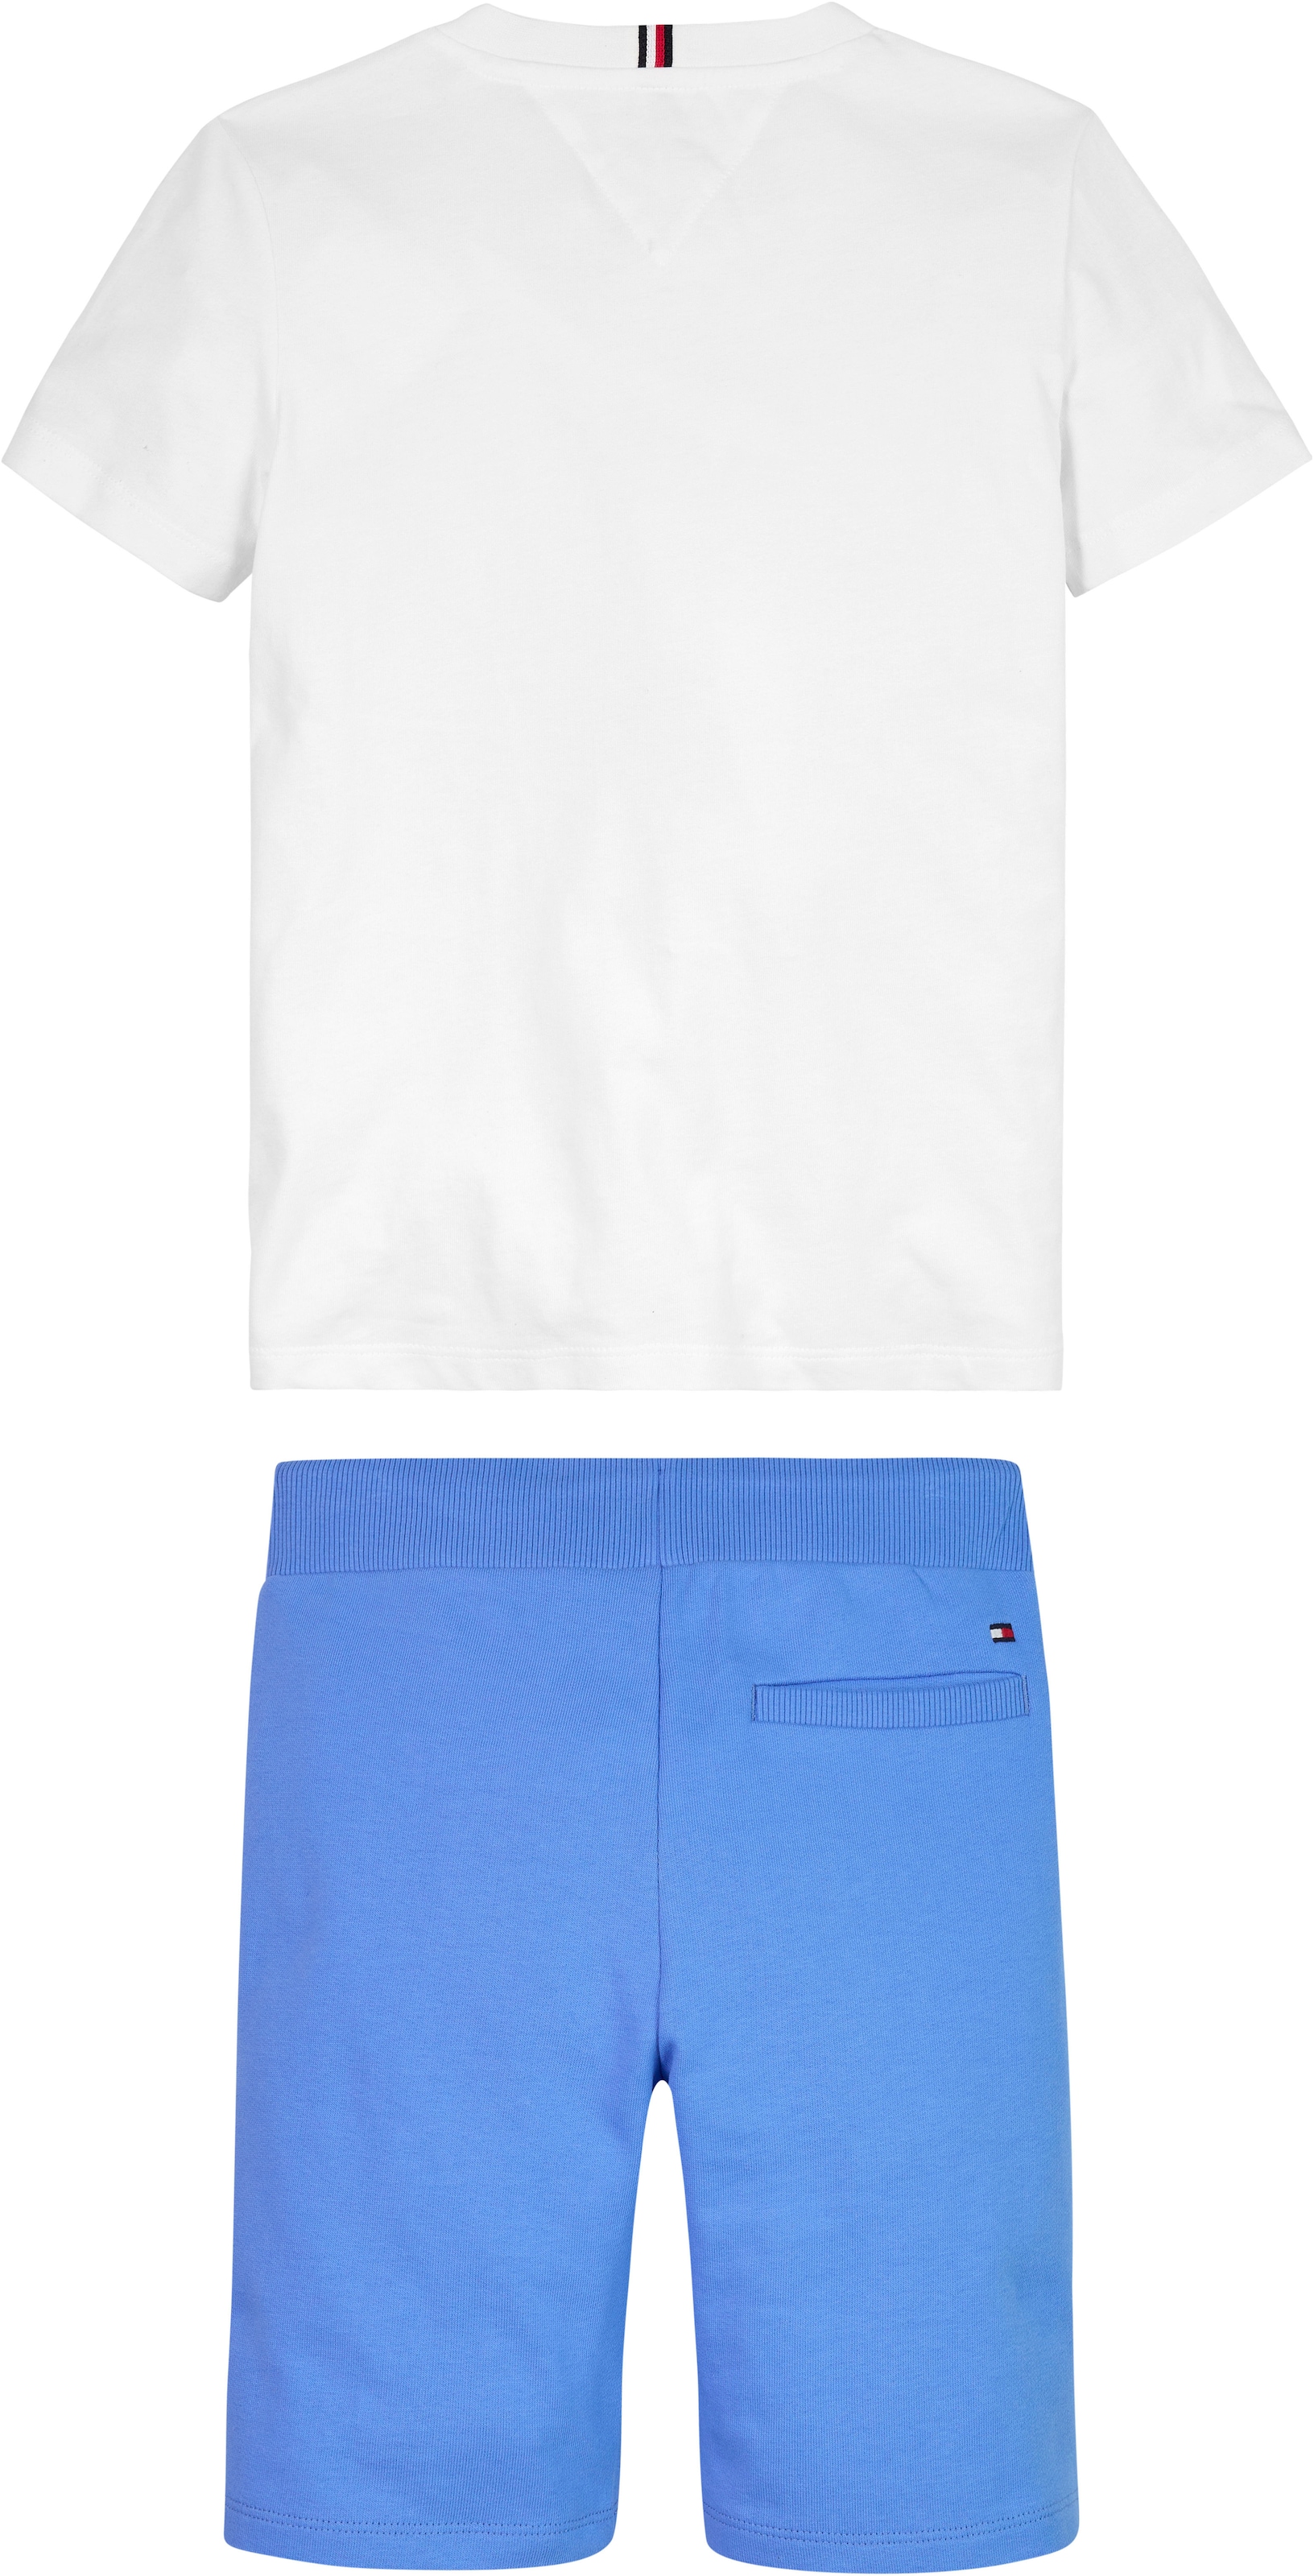 Tommy Hilfiger Shirt & Hose »ESSENTIAL SET«, (Set, Shirt + Shorts), Baby bis 2 Jahre, Shirt & Shorts